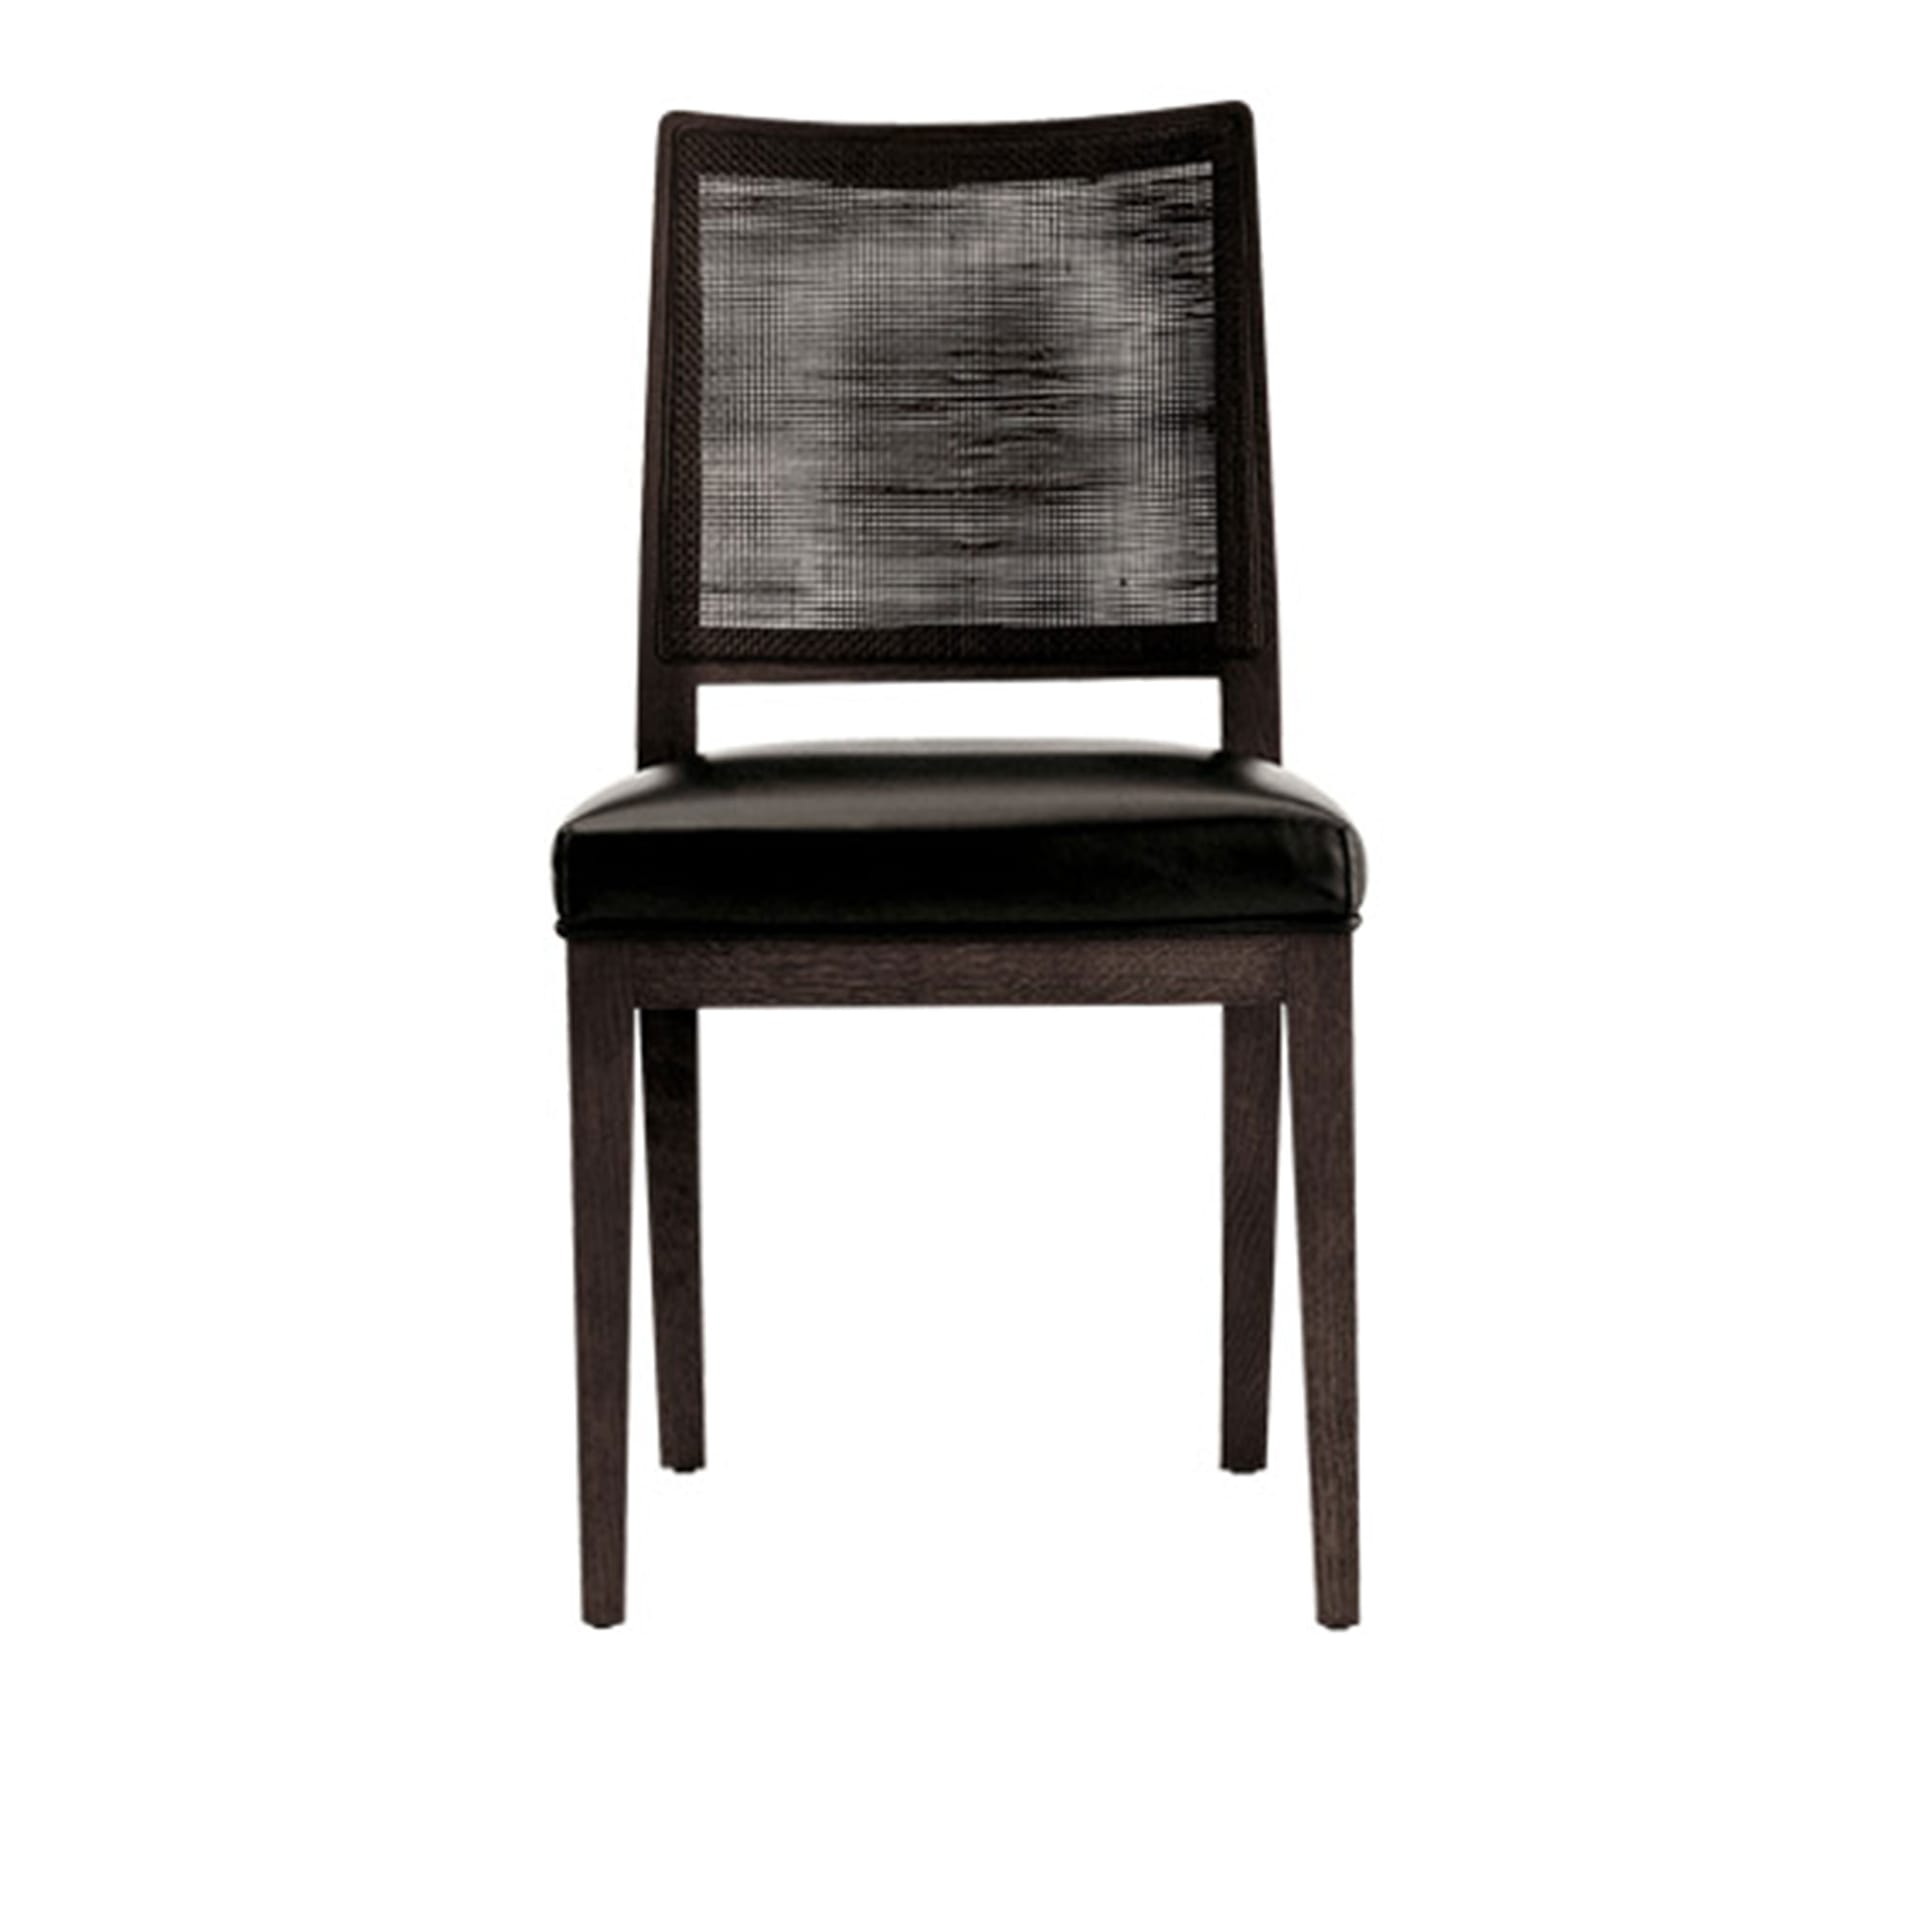 Calipso Chair - Maxalto - Antonio Citterio - NO GA